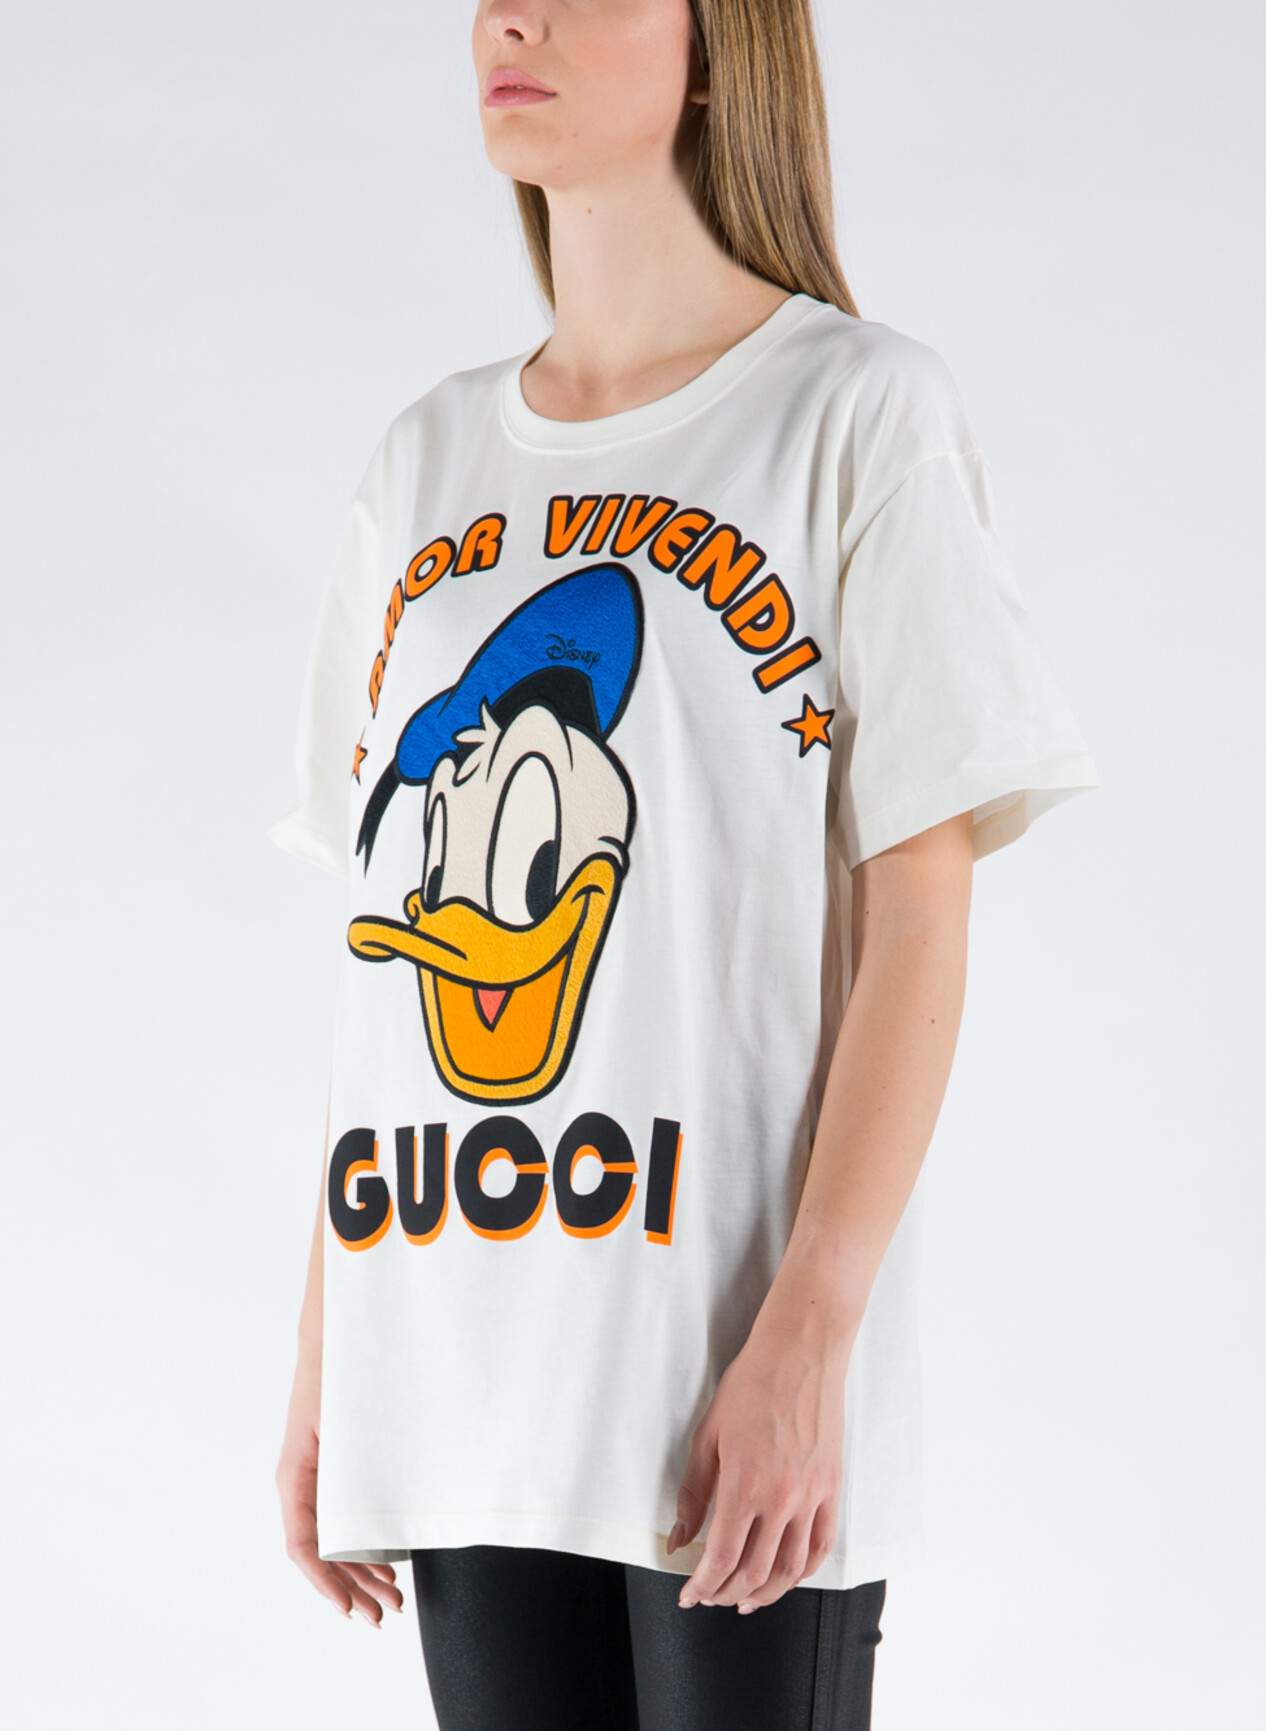 Gucci 615044 XJDBJ DONALD DUCK T-shirt White